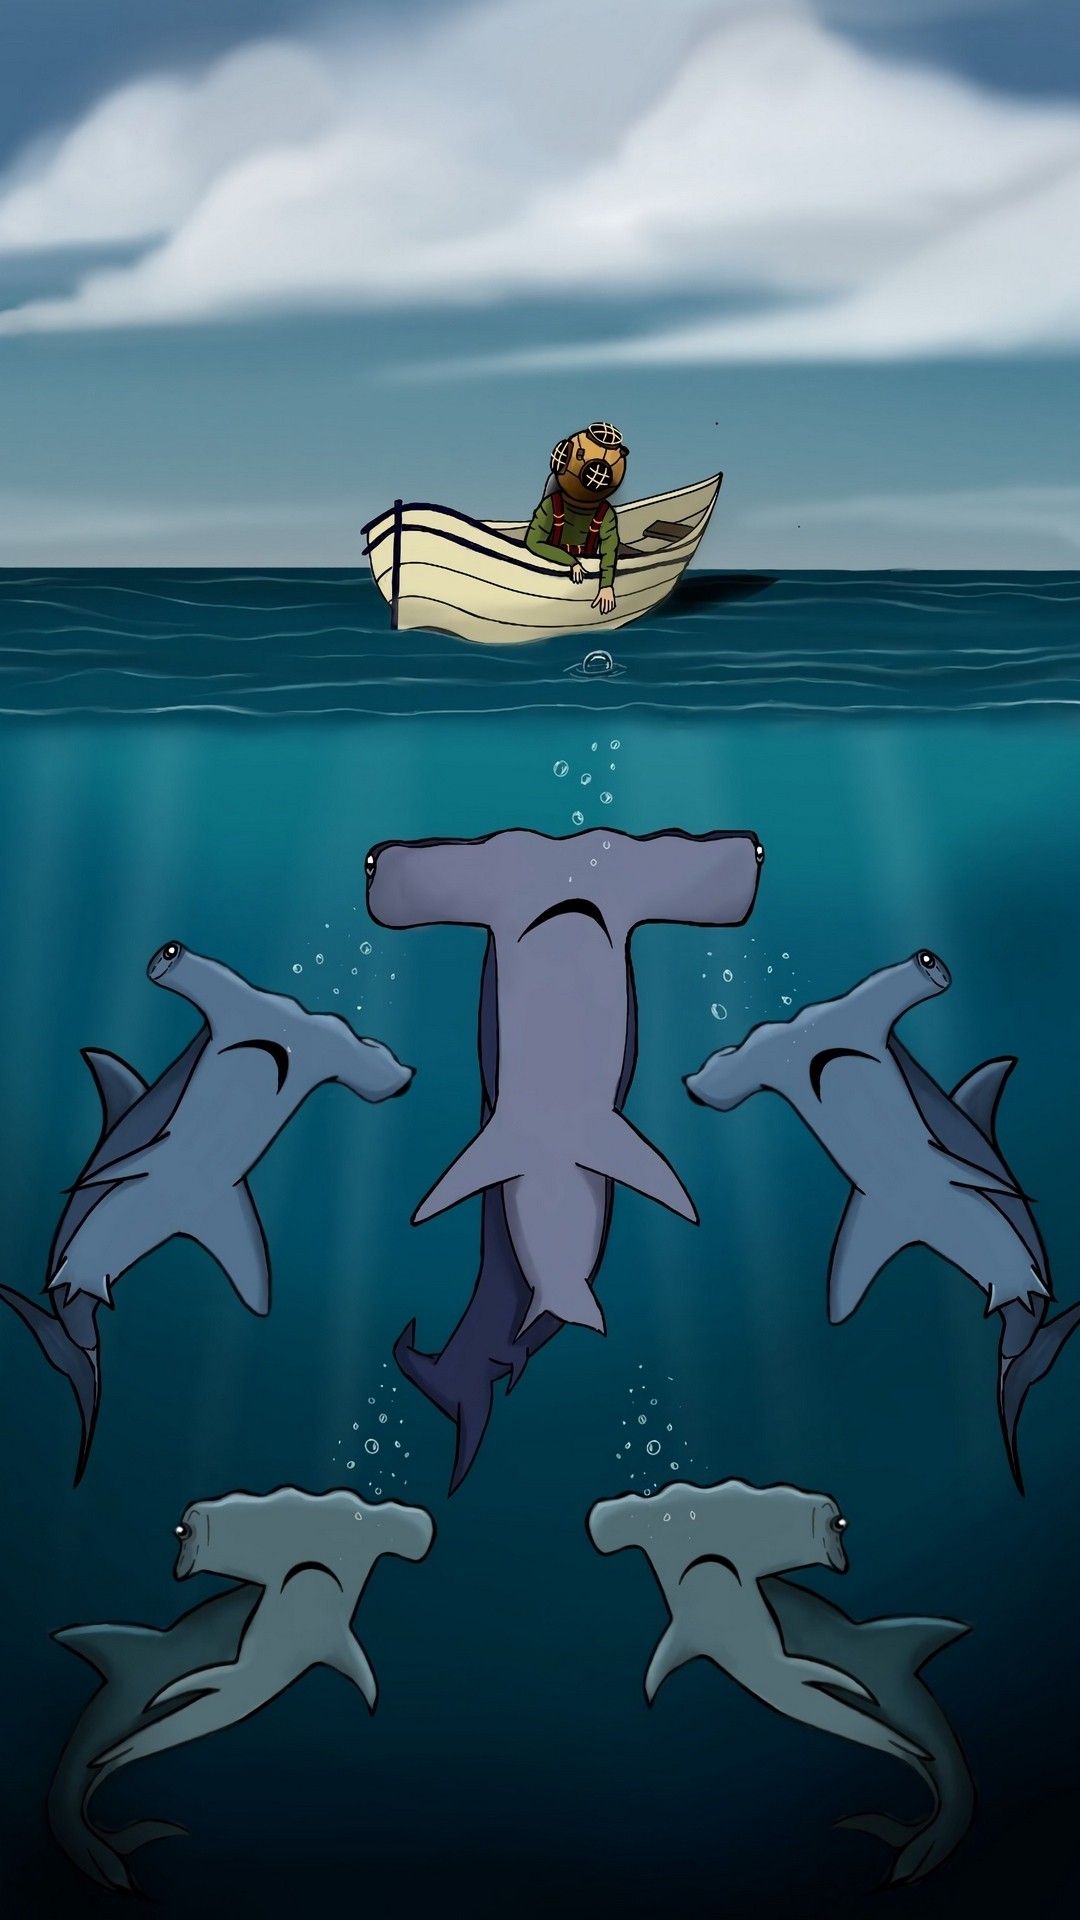 Shark iPhone Wallpaper image .wallpaperboat.com